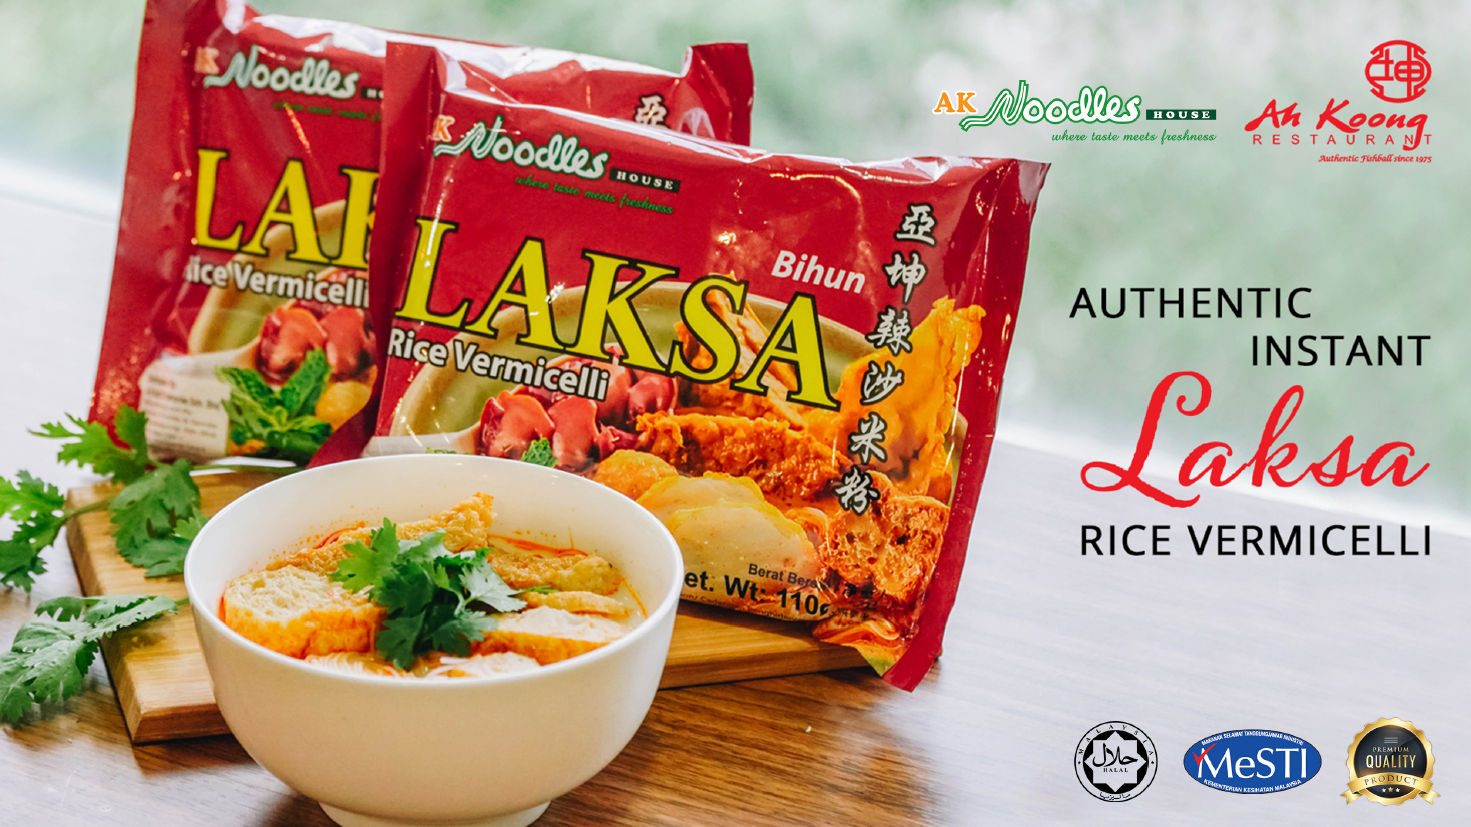 Authentic Instant Laksa - Rice Vermicelli